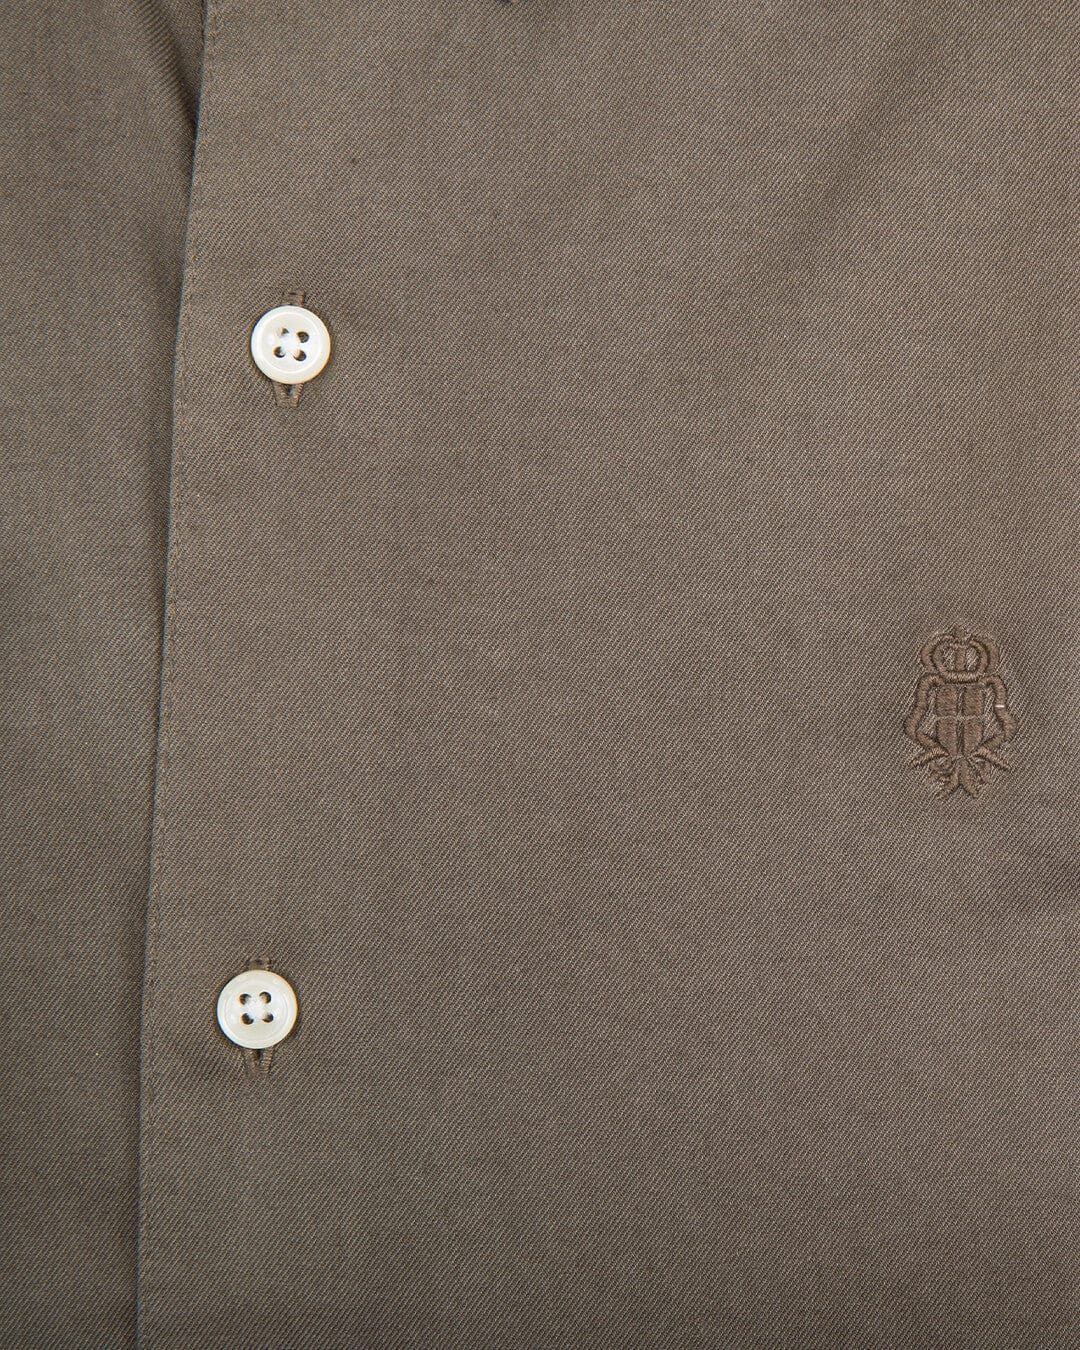 Gagliardi Shirts Gagliardi Taupe Cotton Twill Button-Down Shirt